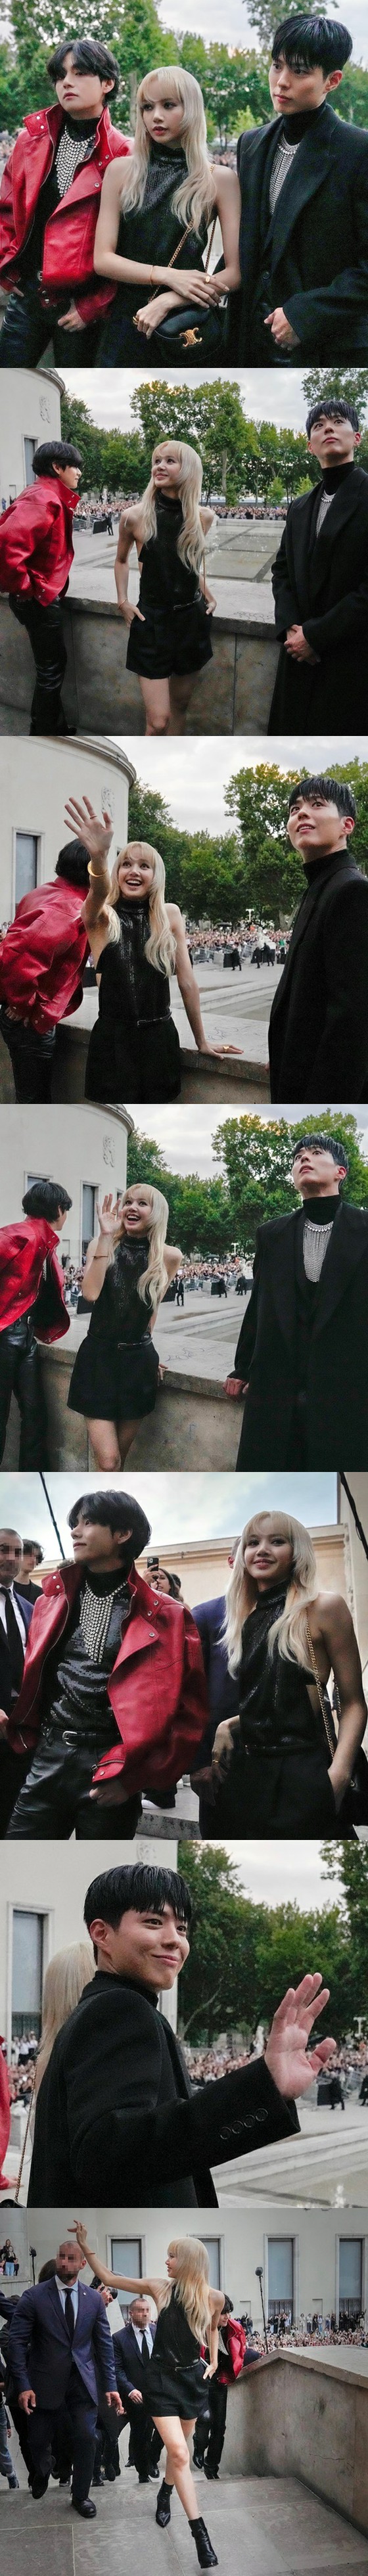 "BTS" V & "BLACKPINK" ลิซ่า & พัคโบกอม ดาราทีมชาติเกาหลีรวมตัวกันที่ปารีส